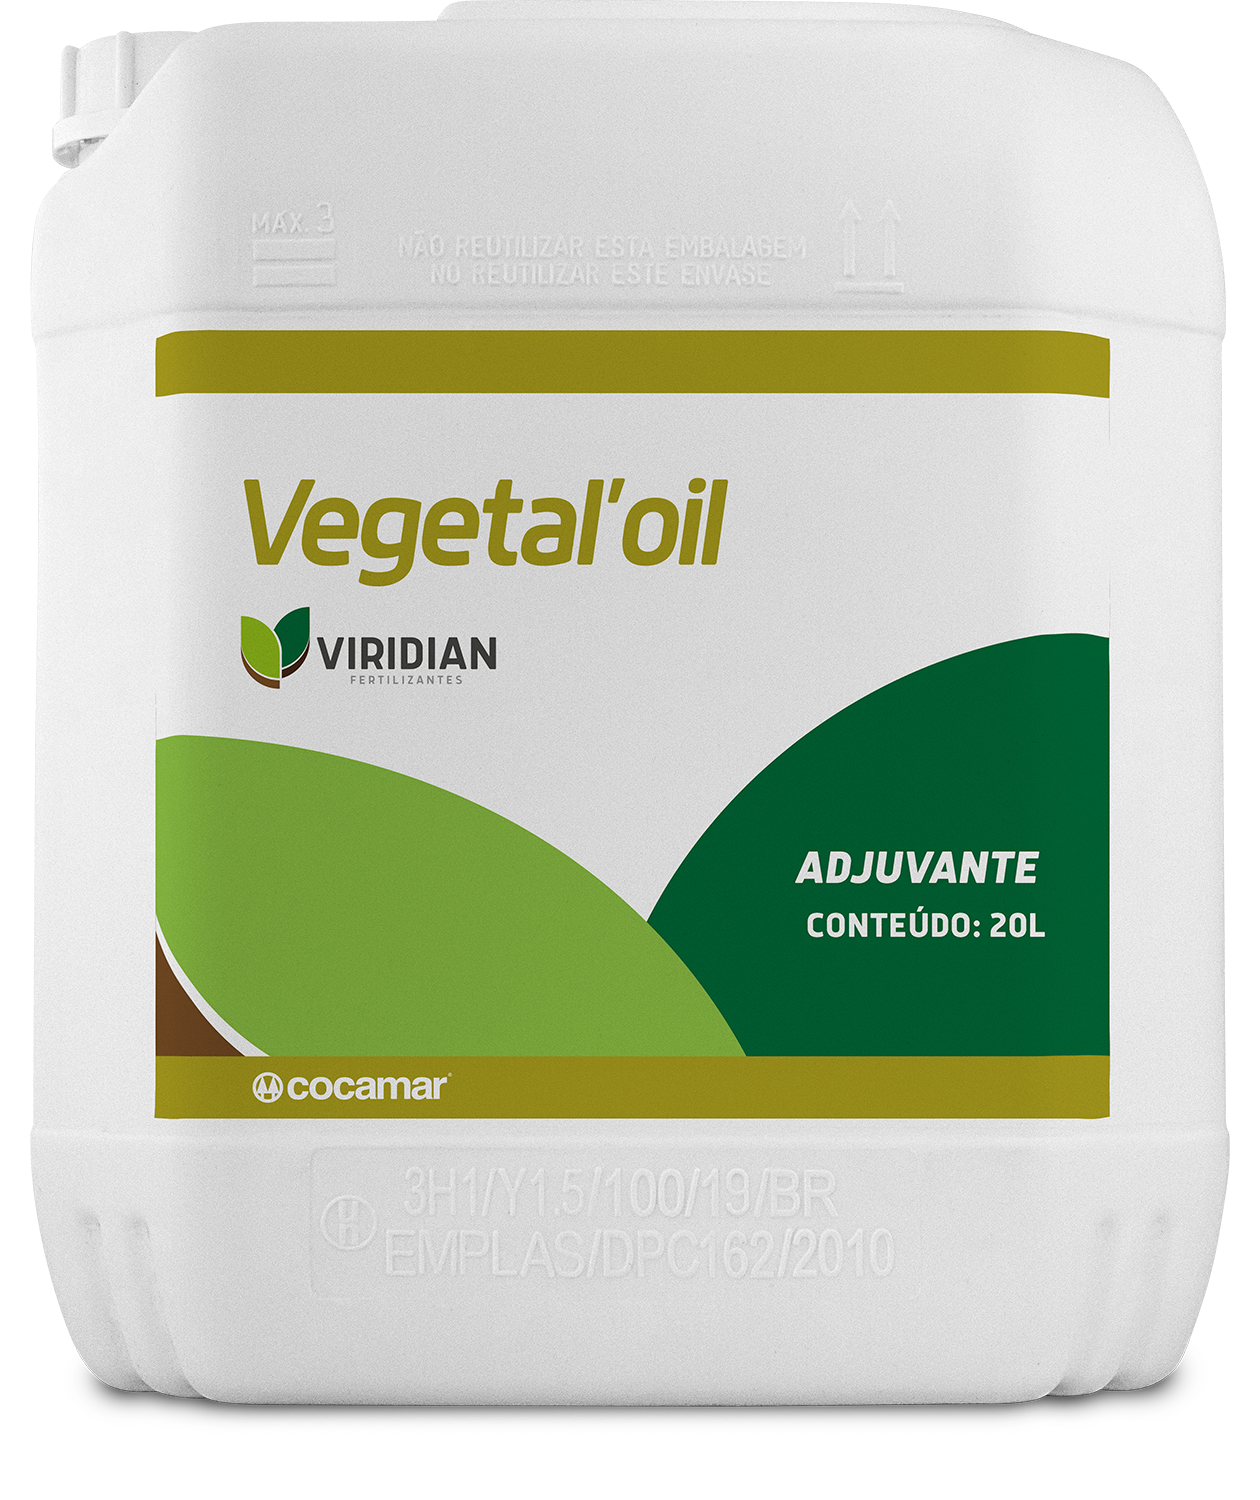 Embalagem Viridian Vegetal’oil